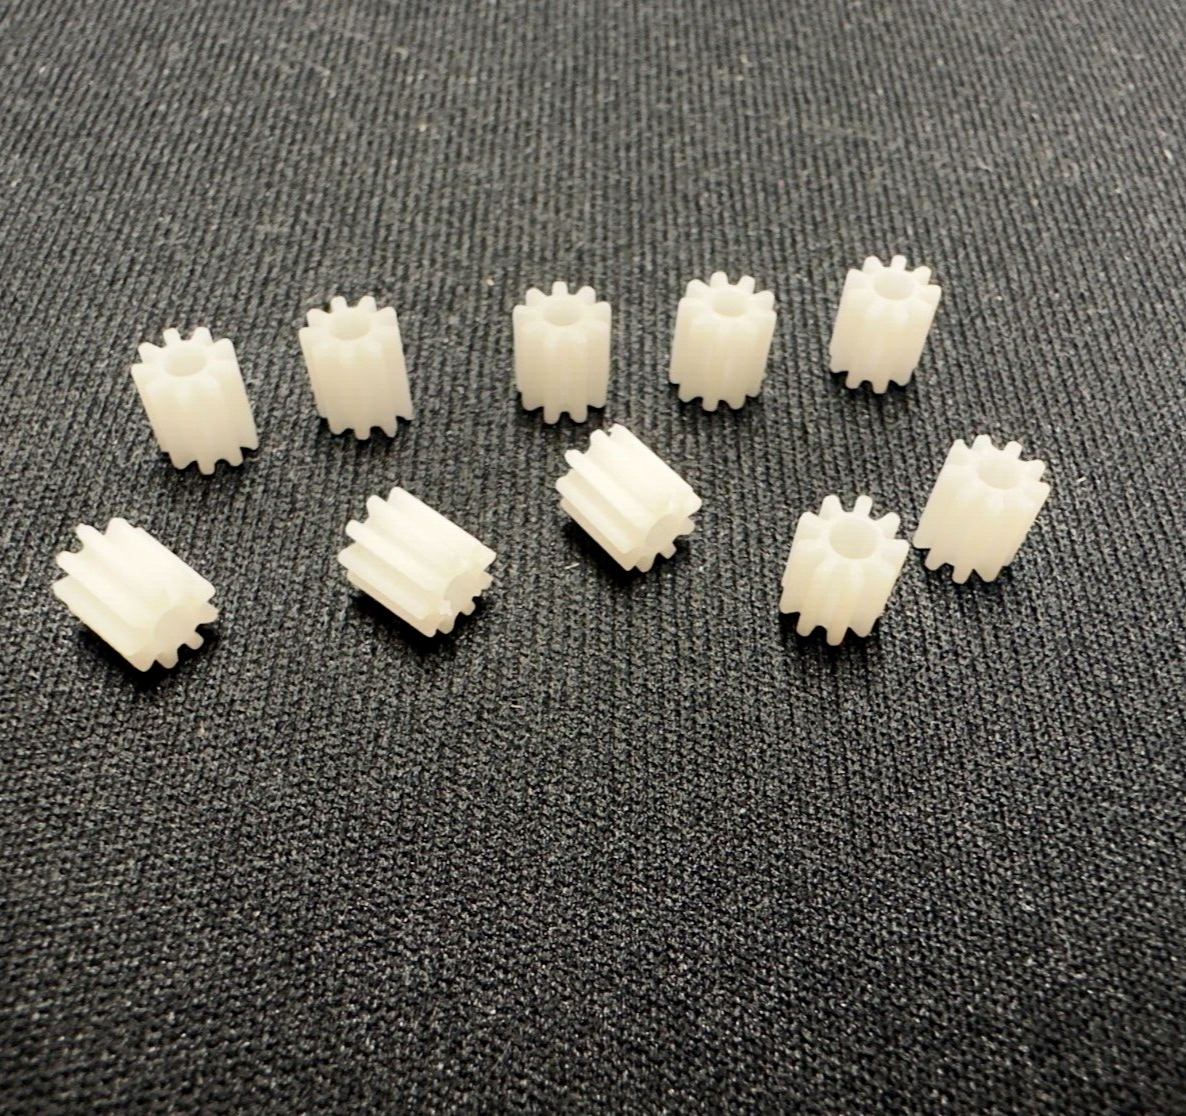 10x Motor Pinion Gear for Lego Duplo Intelli Locomotive Module 0.4 9 Teeth Rubber